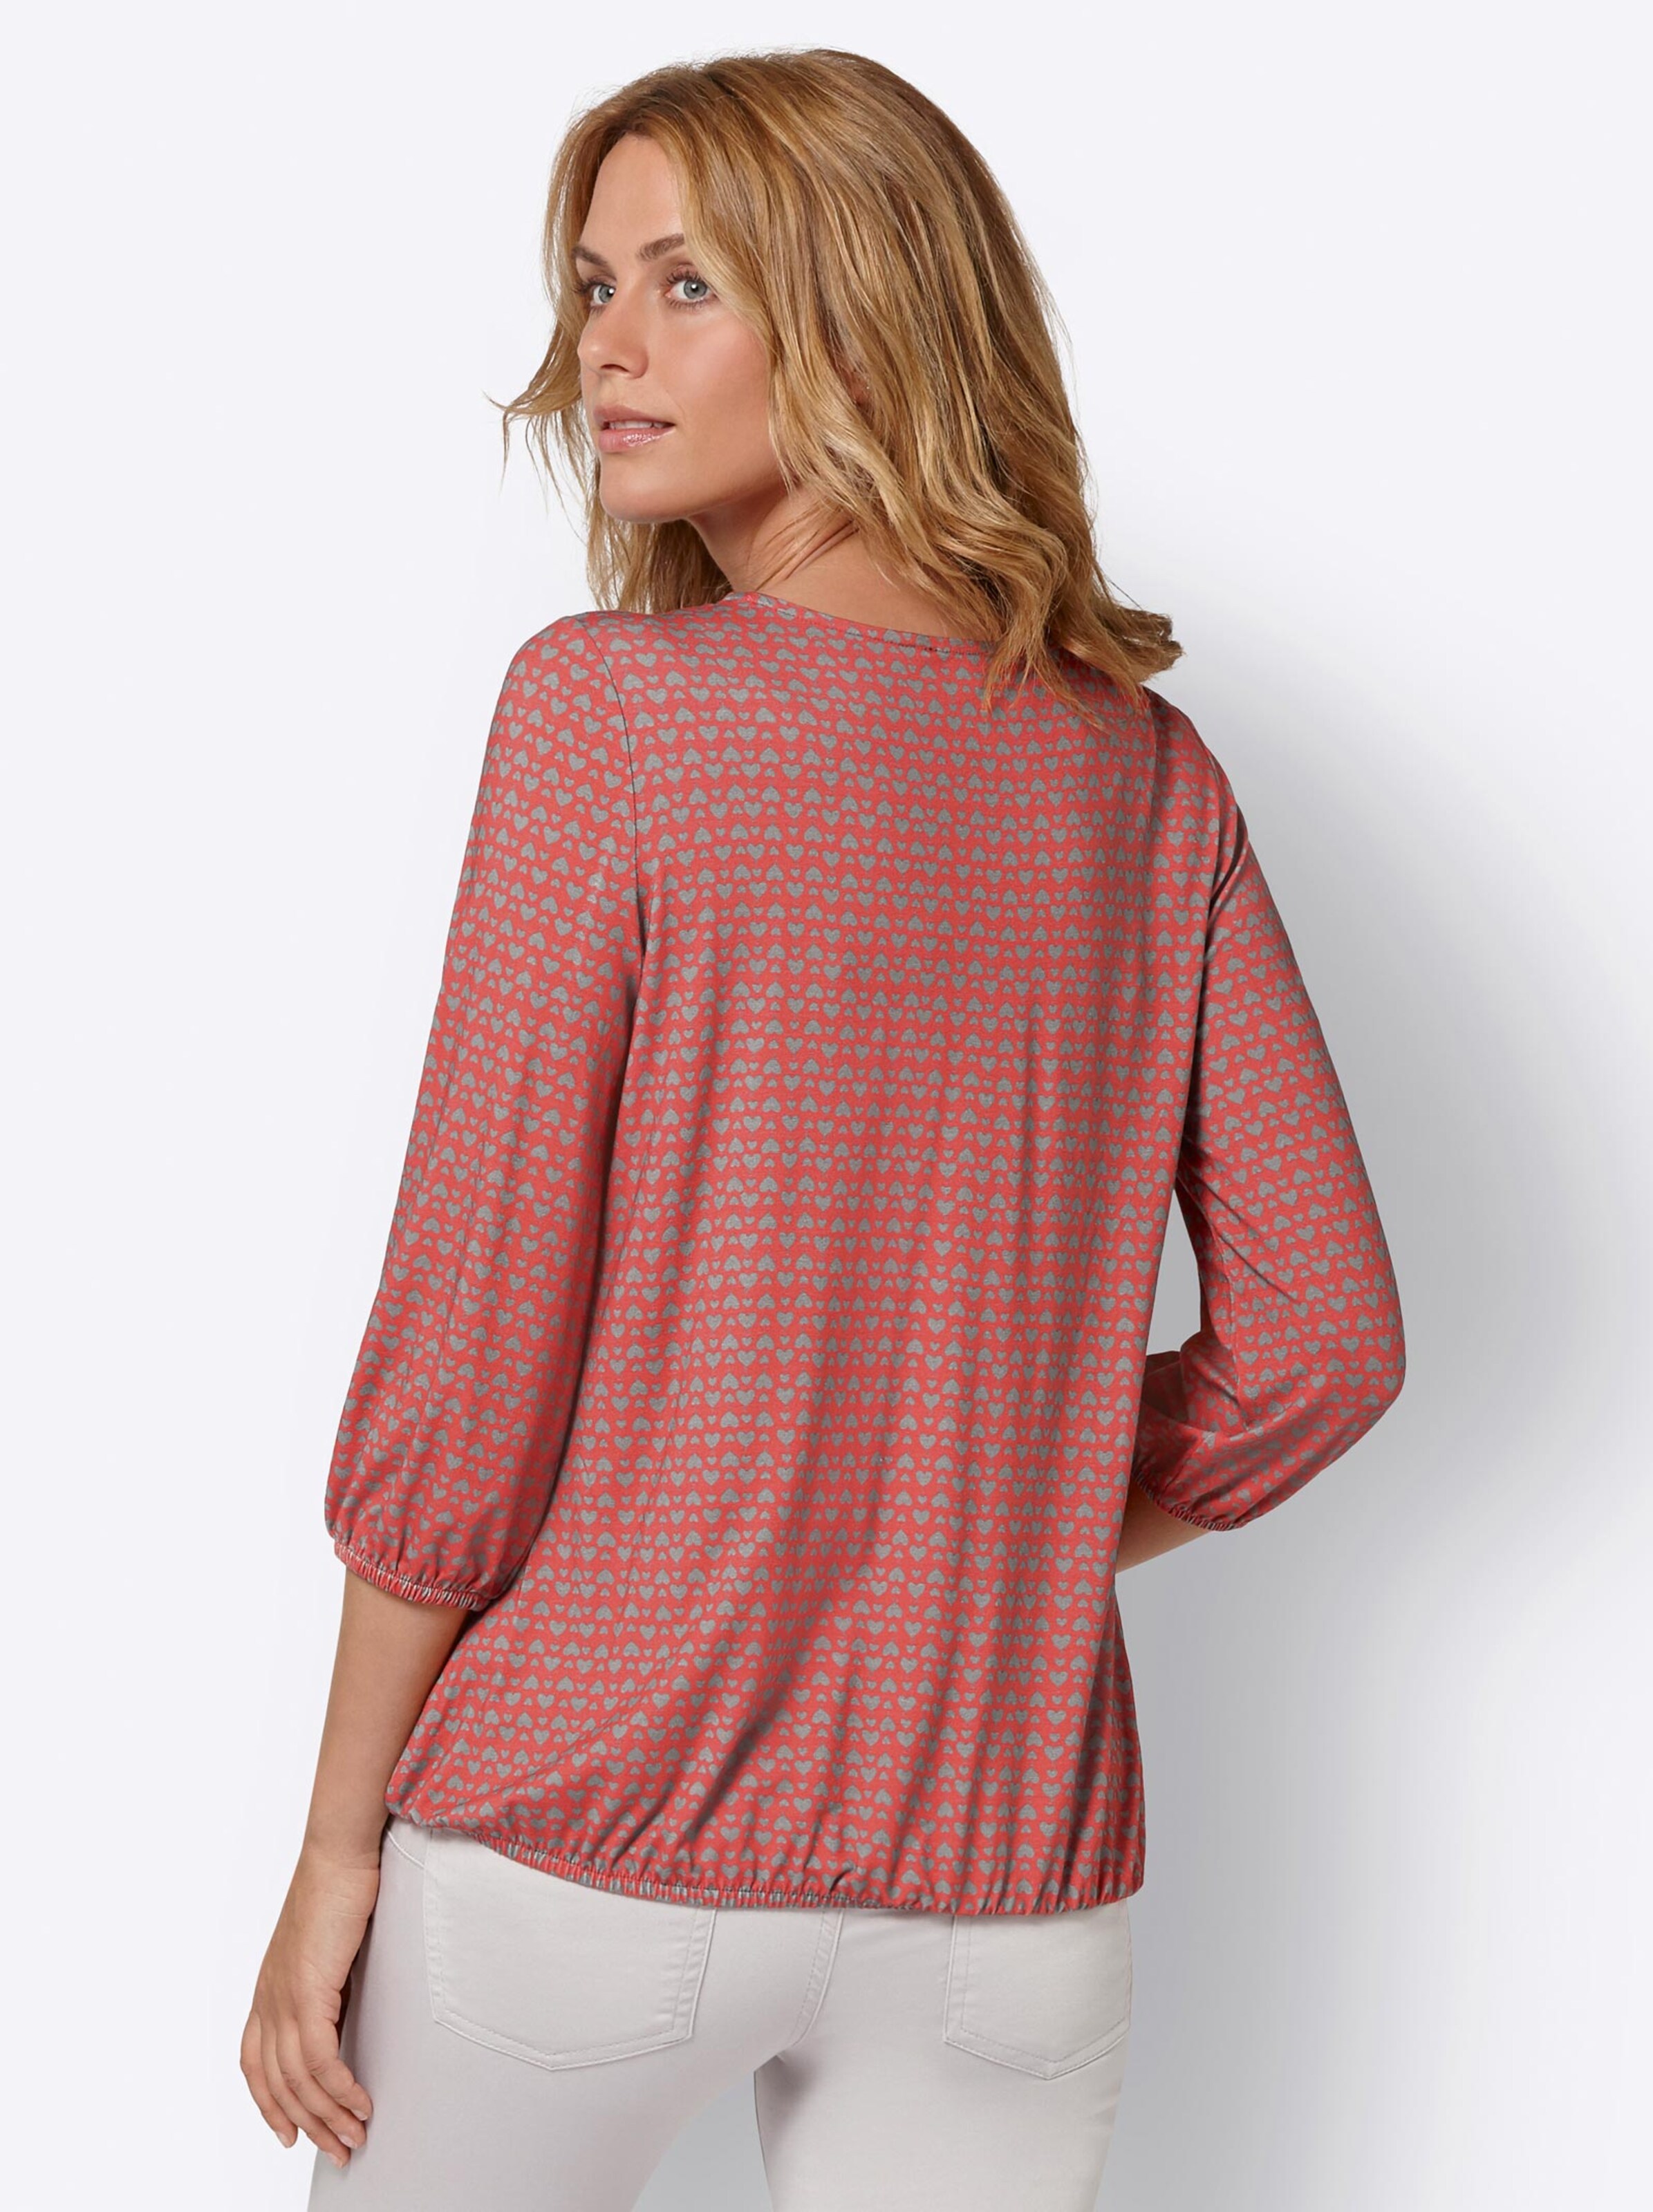 Damenmode Shirts Rundhalsshirt in grapefruit-steingrau-bedruckt 